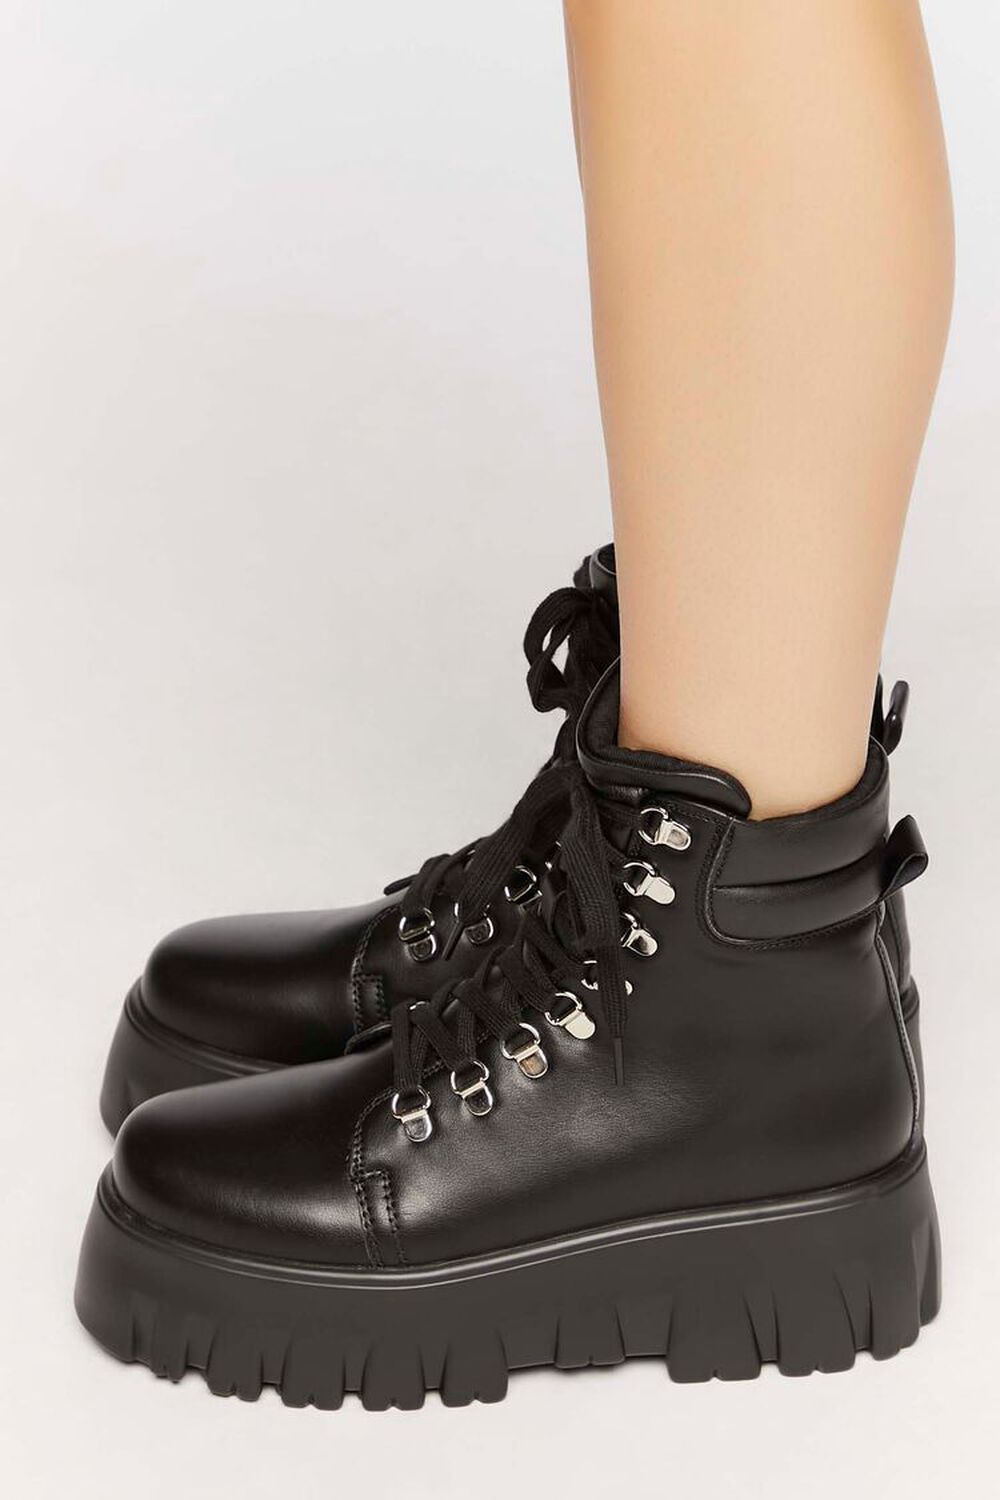 BLACK Faux Leather Lace-Up Combat Boots, image 2